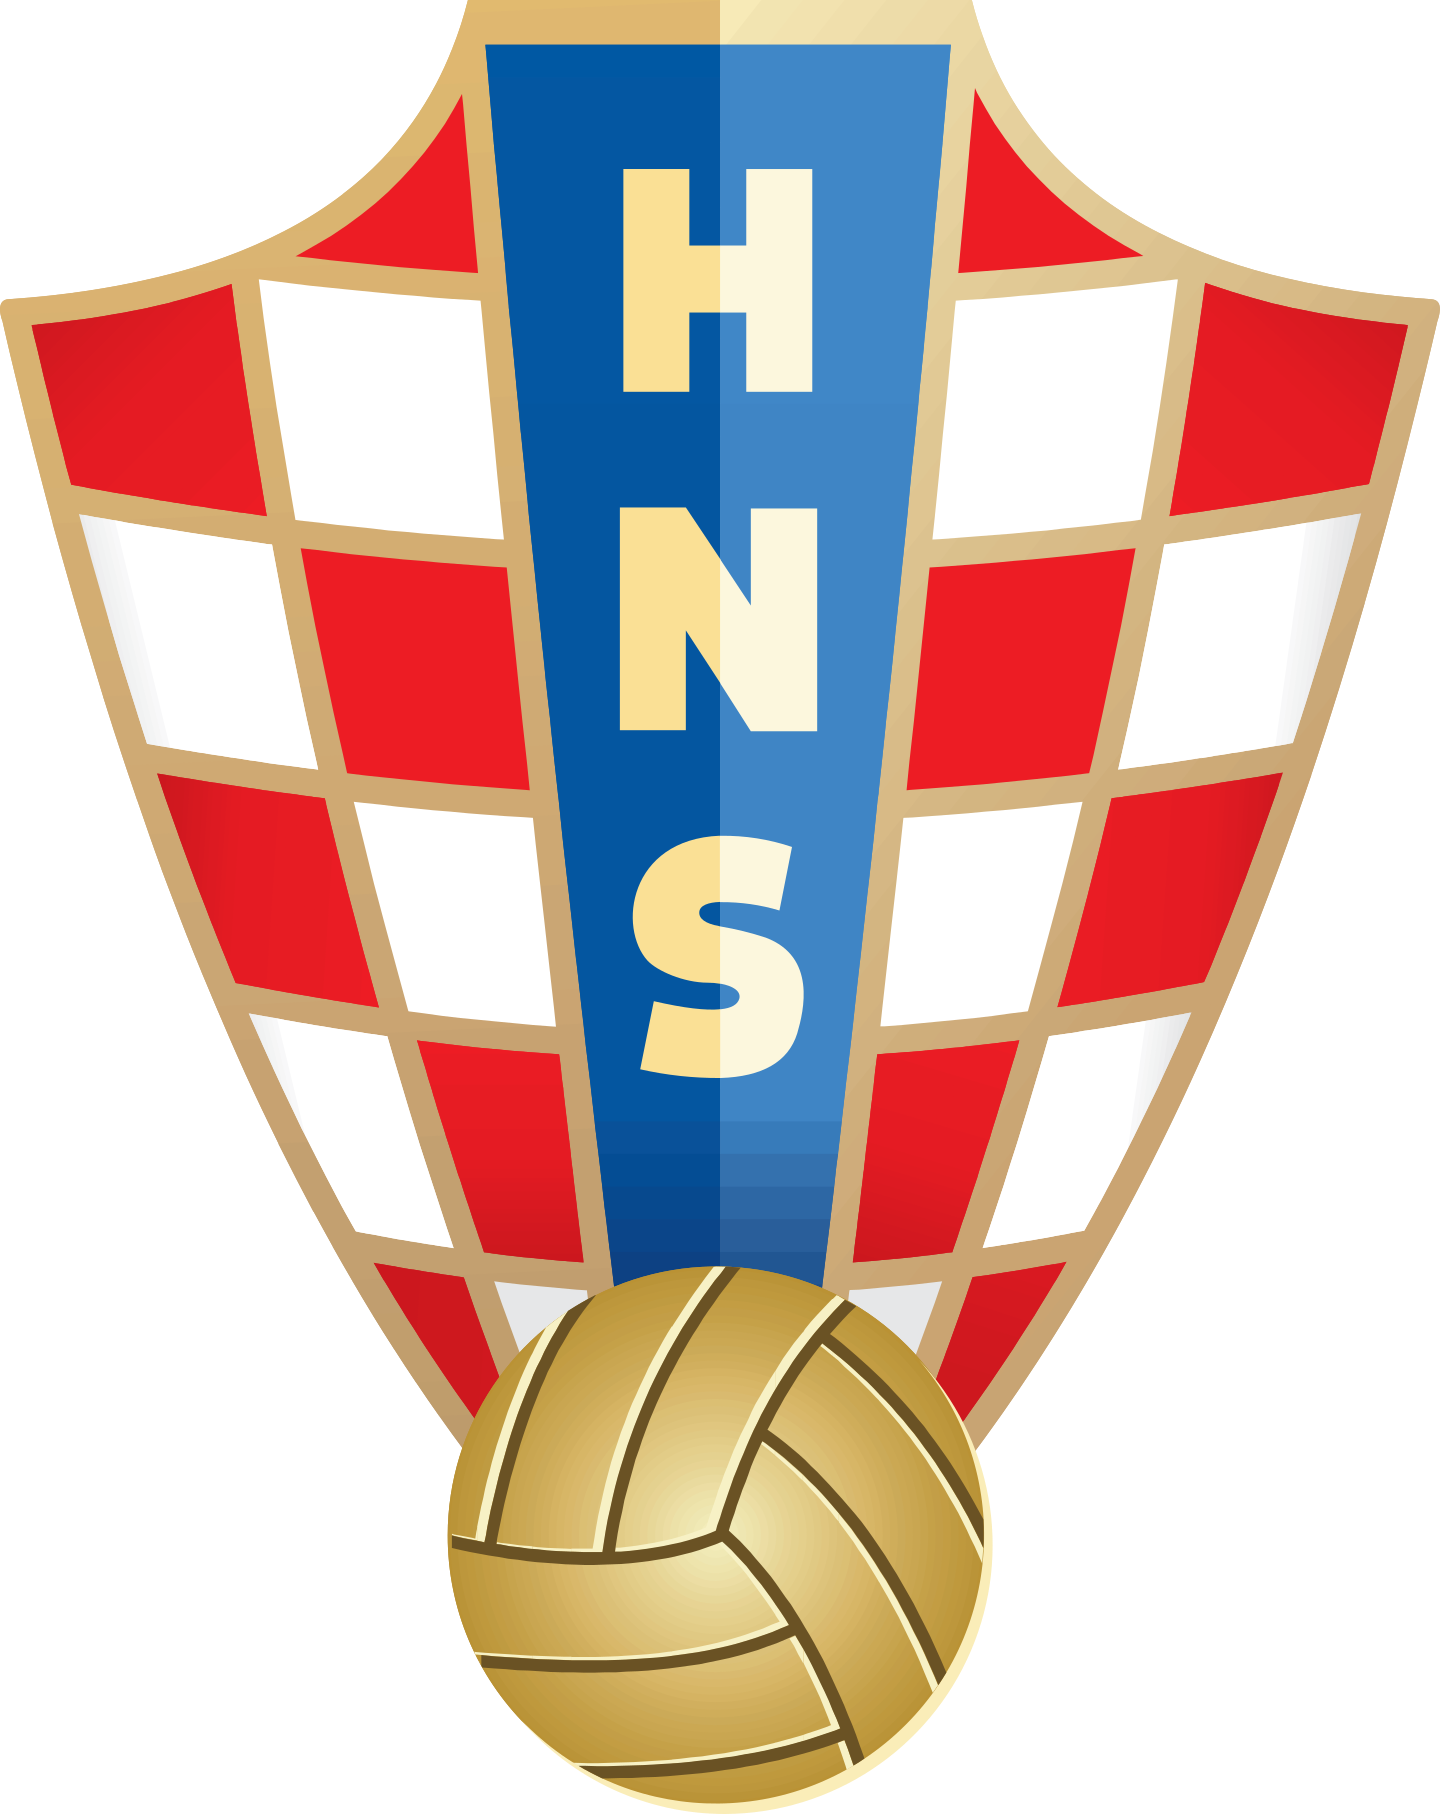 croatia national football team logo 2 - Croatia National Football Team Logo